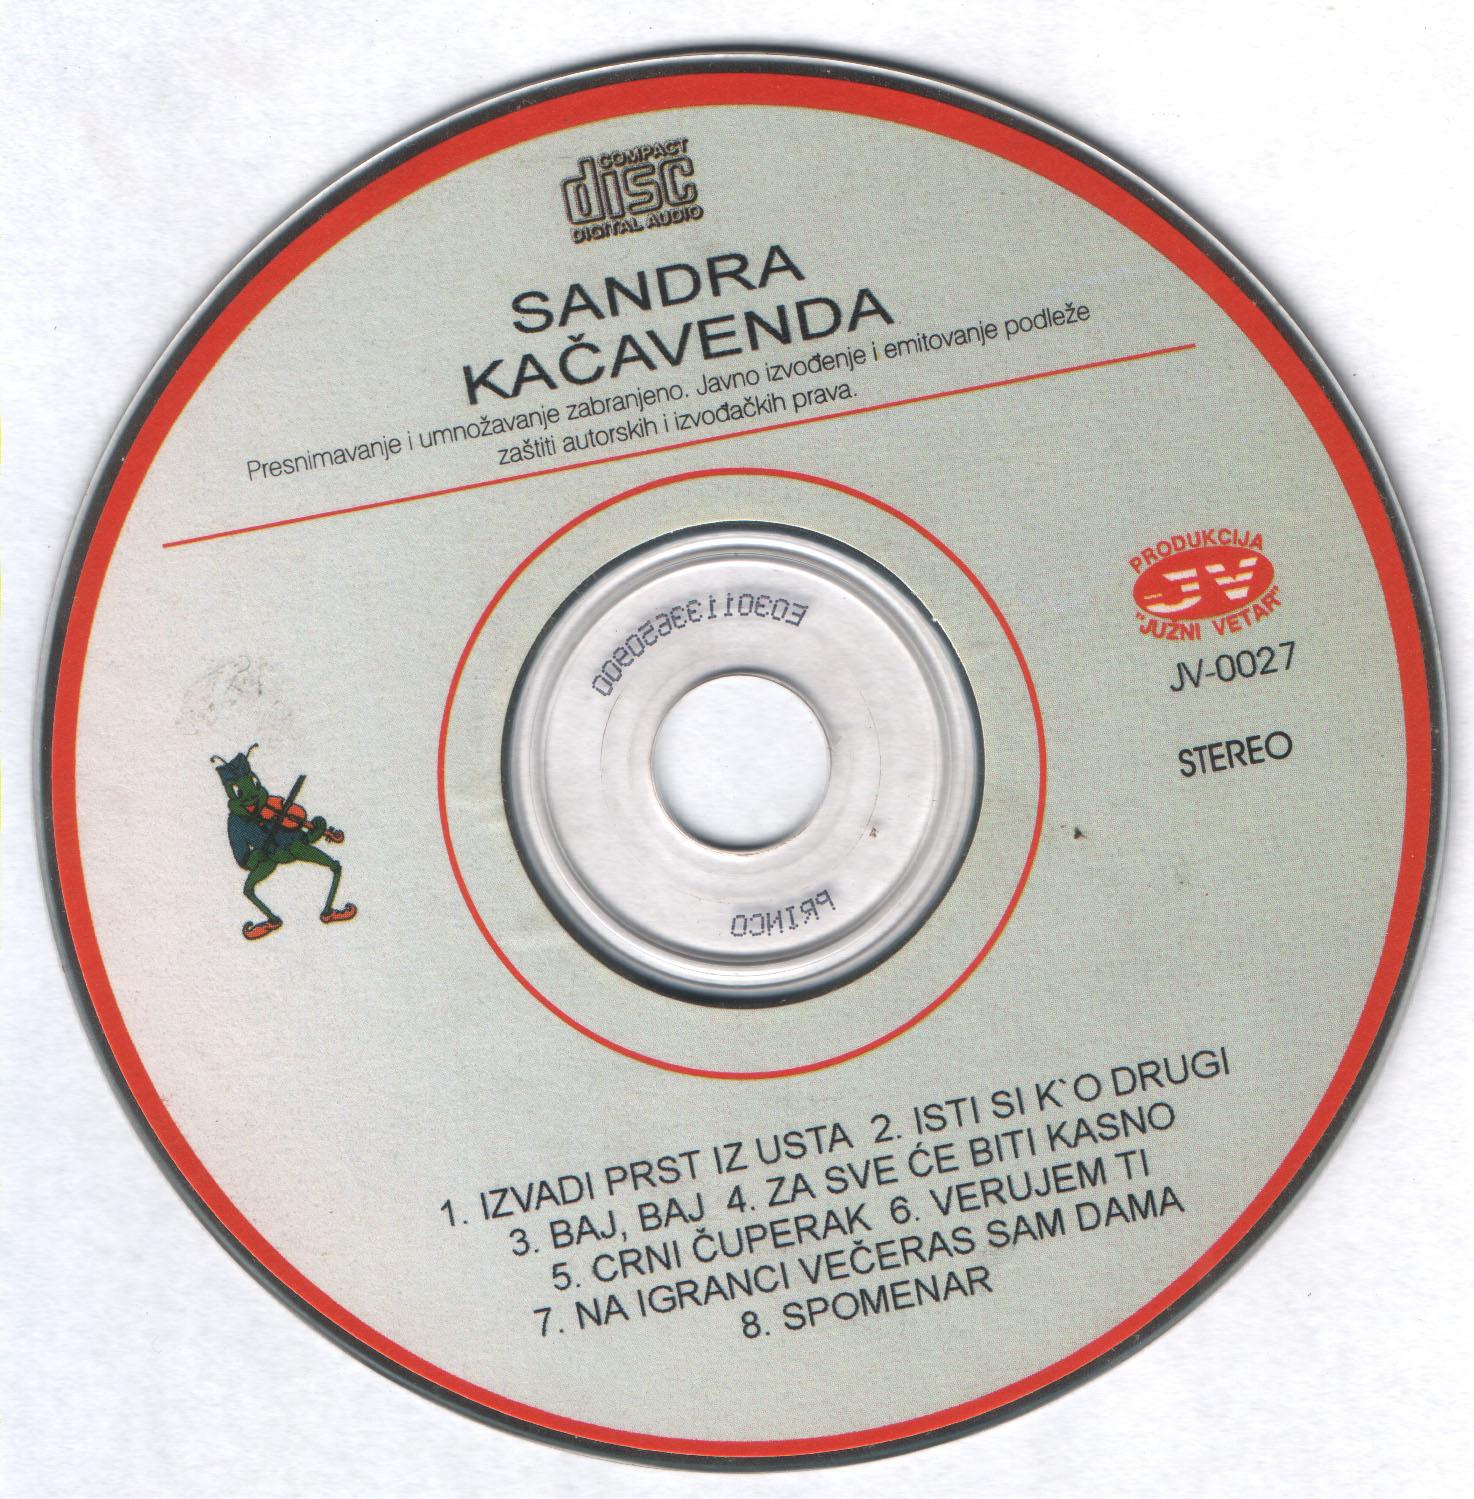 Sandra Kacavenda 2000 Cd